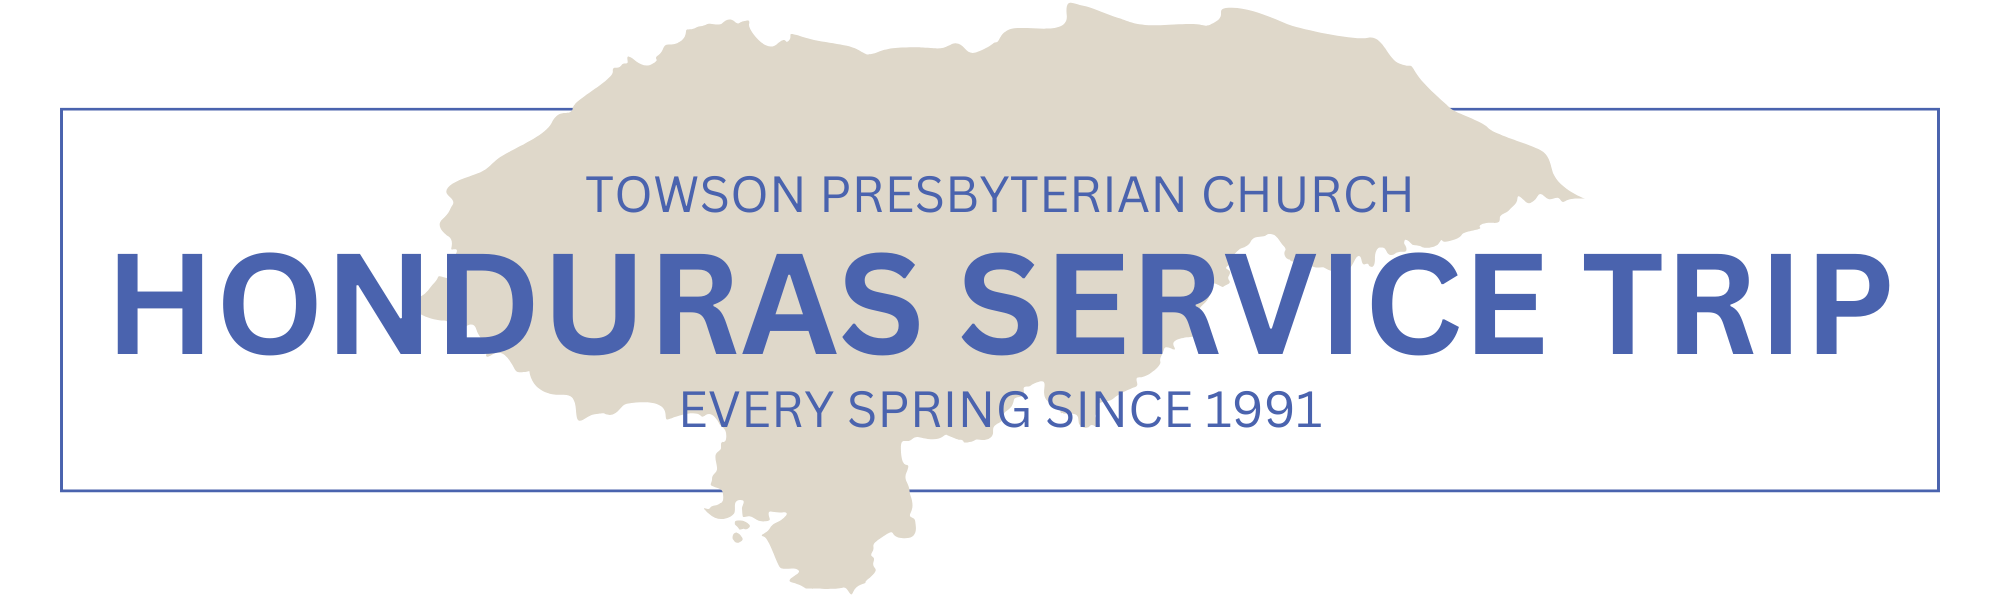 Graphic that reads: "Towson Presbyterian Church. Honduras Service Trip. Every Spring Since 1991."